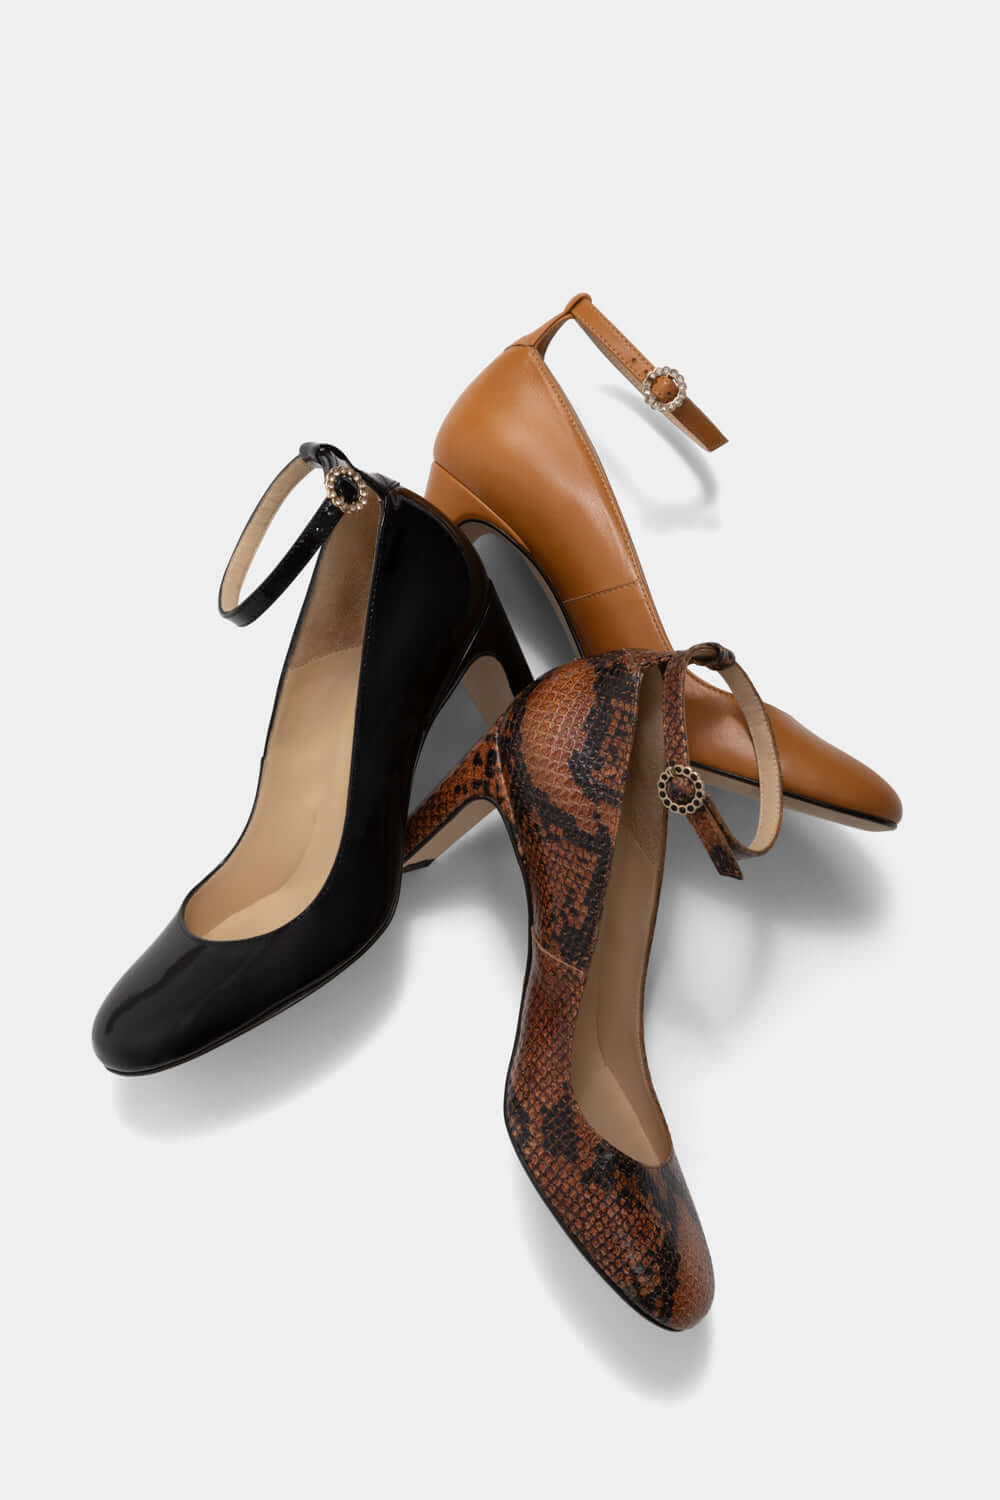 kallu-kallú-black-brown-mustard-nappa-leather-shoes-for-women-made-in-spain-heels-shoes-high-heels-pums